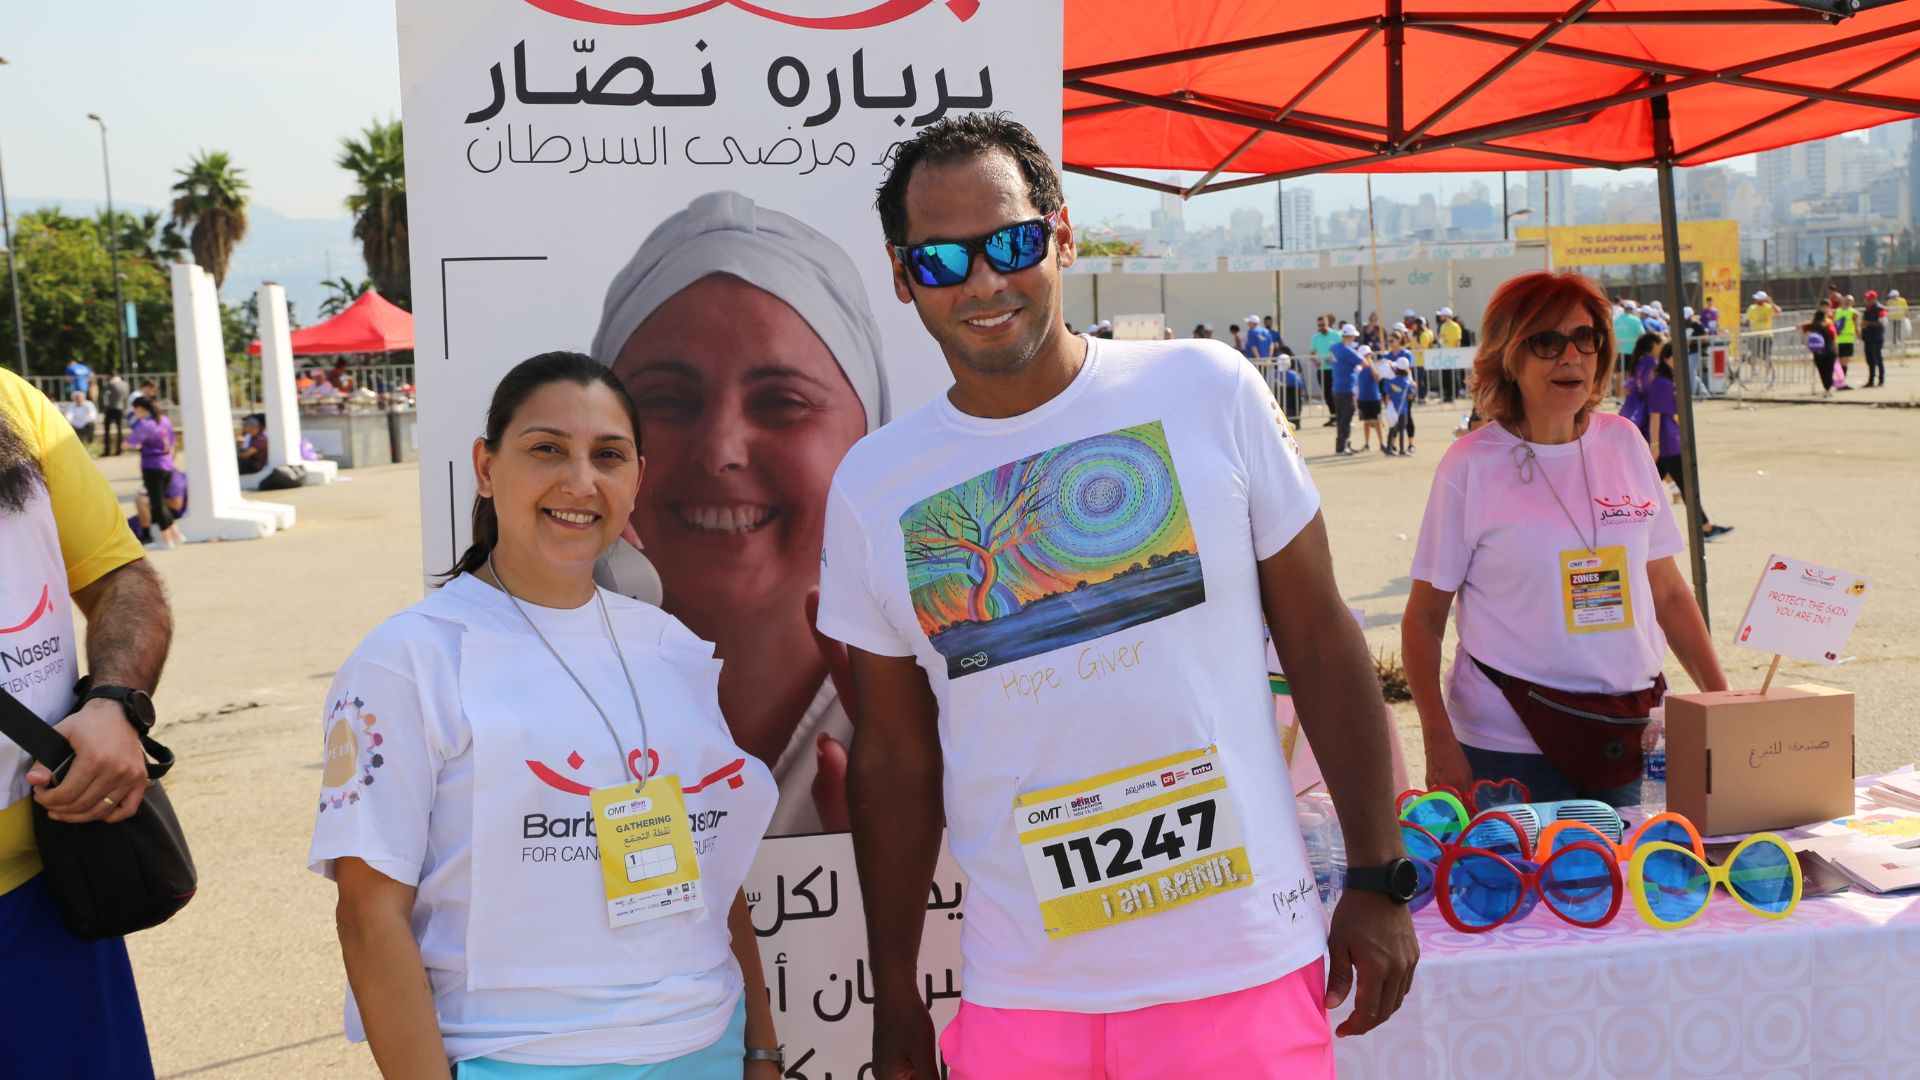 Beirut International marathon in Lebanon with Barbara Nassar Association